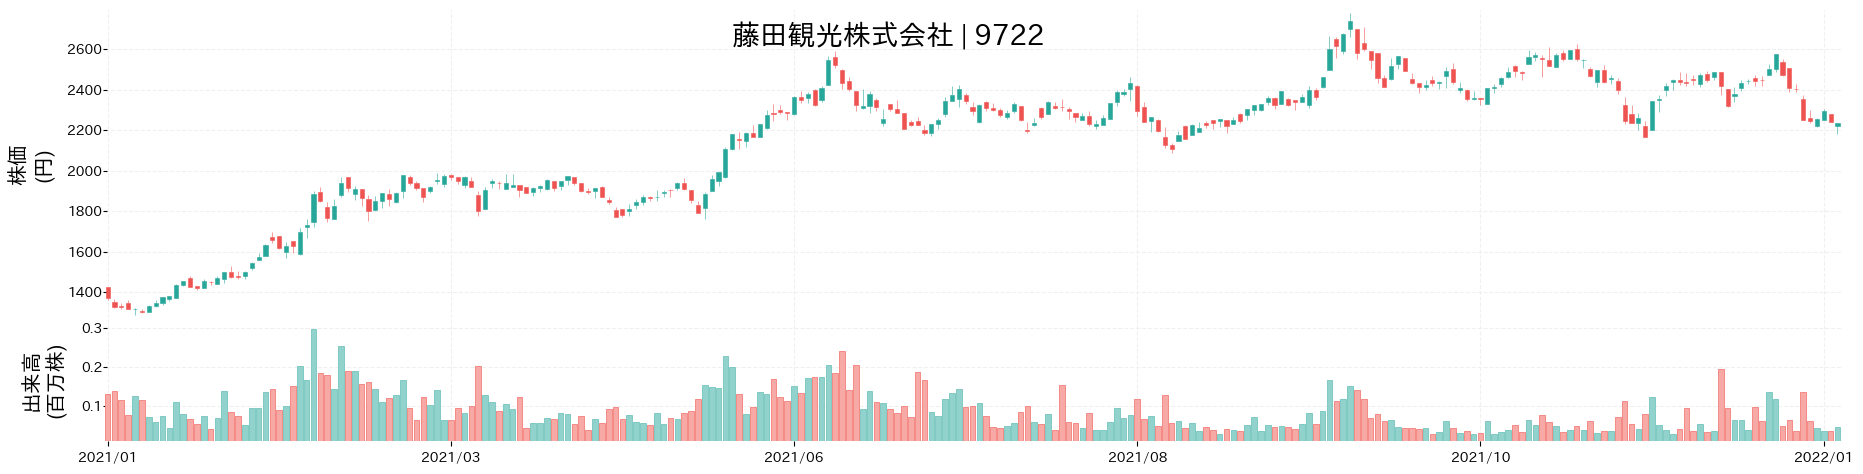 藤田観光の株価推移(2021)